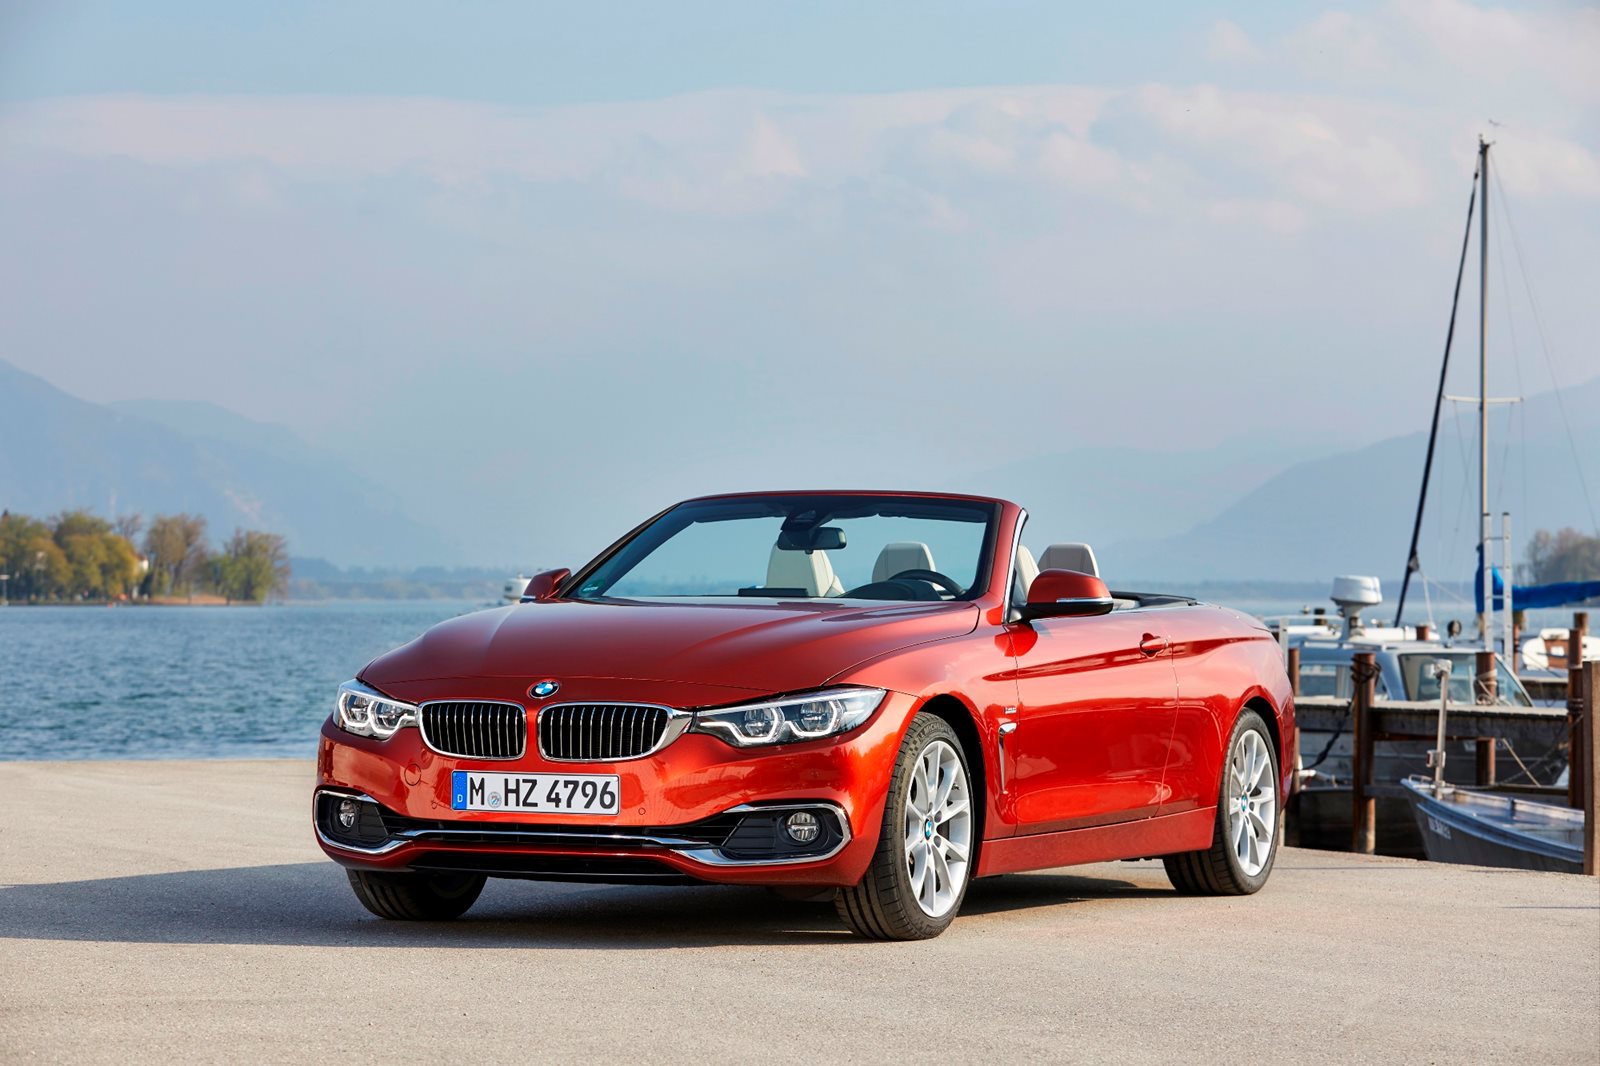 2020 BMW 4series Convertible Hardtop Review, Price, Trims